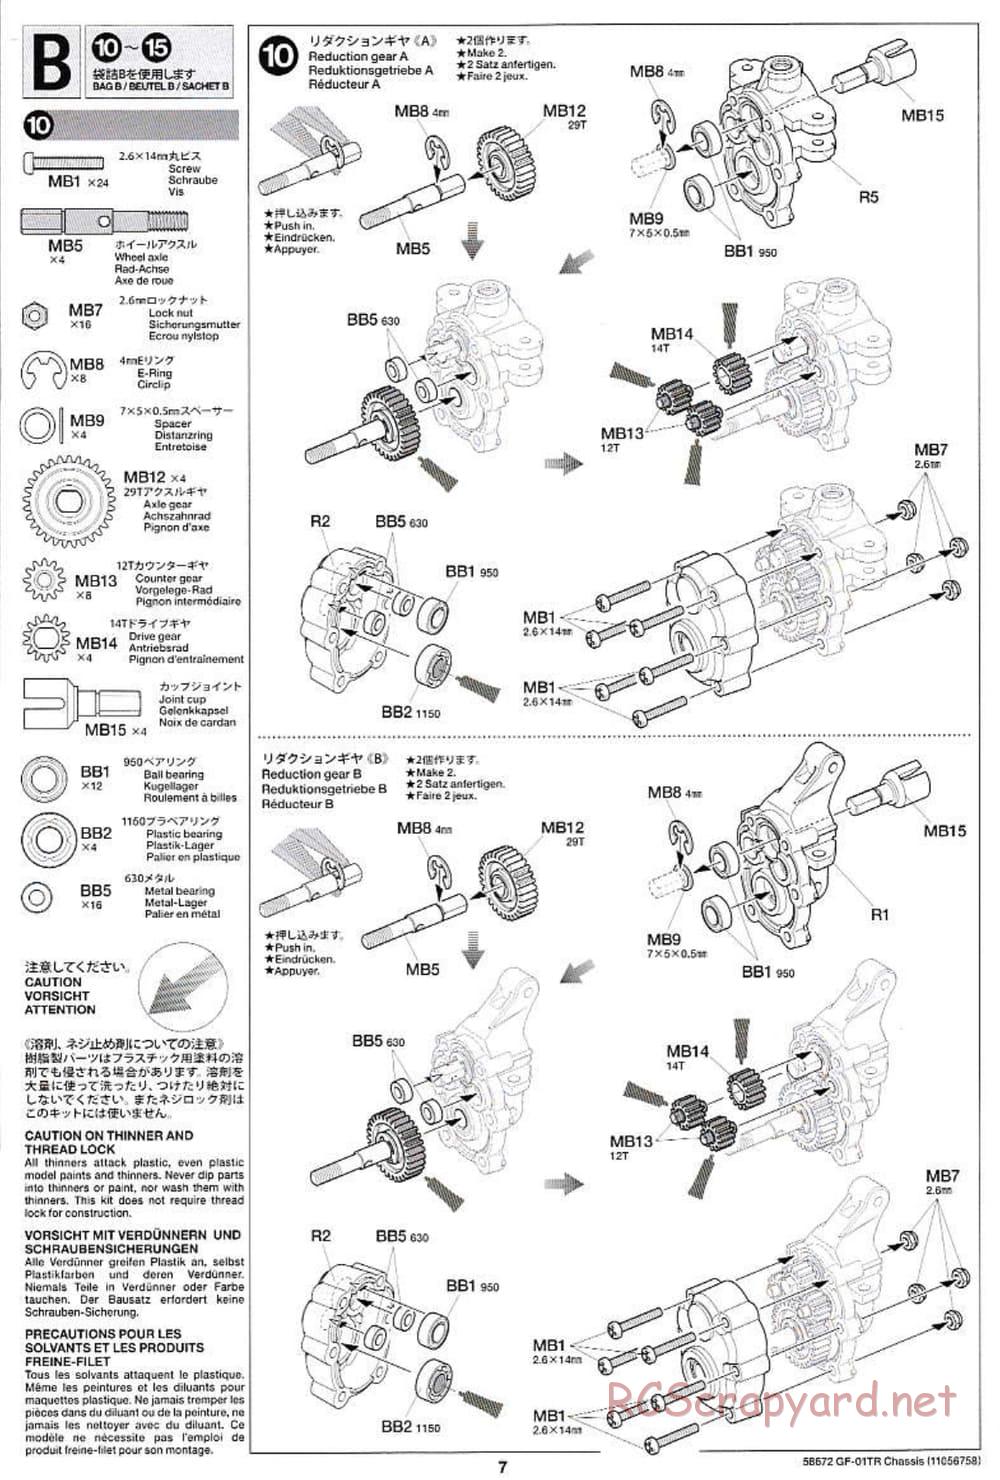 Tamiya - Monster Beetle Trail - GF-01TR Chassis - Manual - Page 7